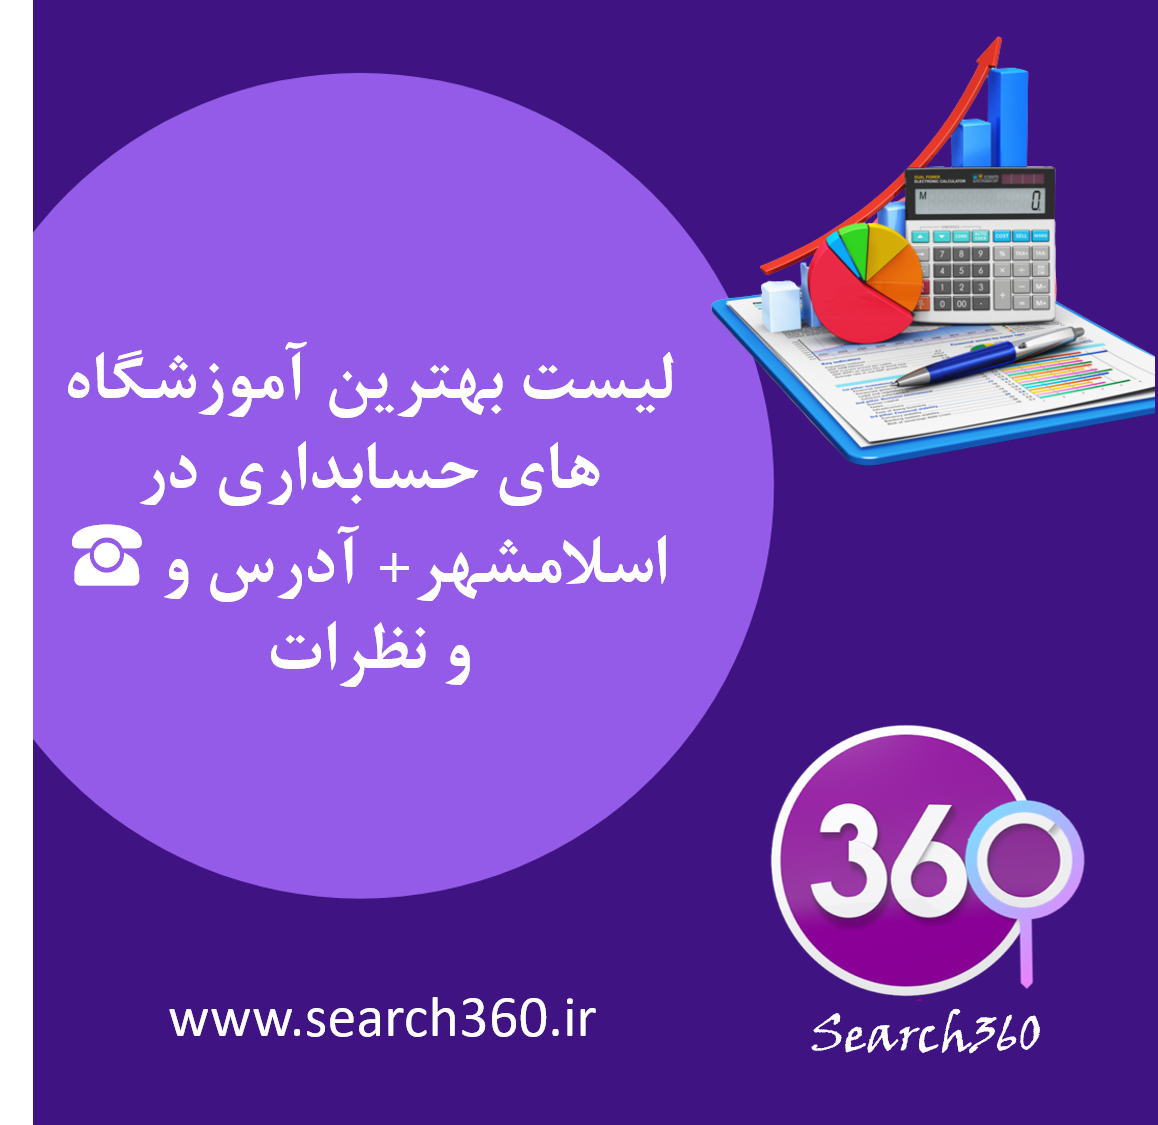 <strong>لیست بهترین آموزشگاه های حسابداری در اسلامشهر+ آدرس و ☎ و نظرات</strong>